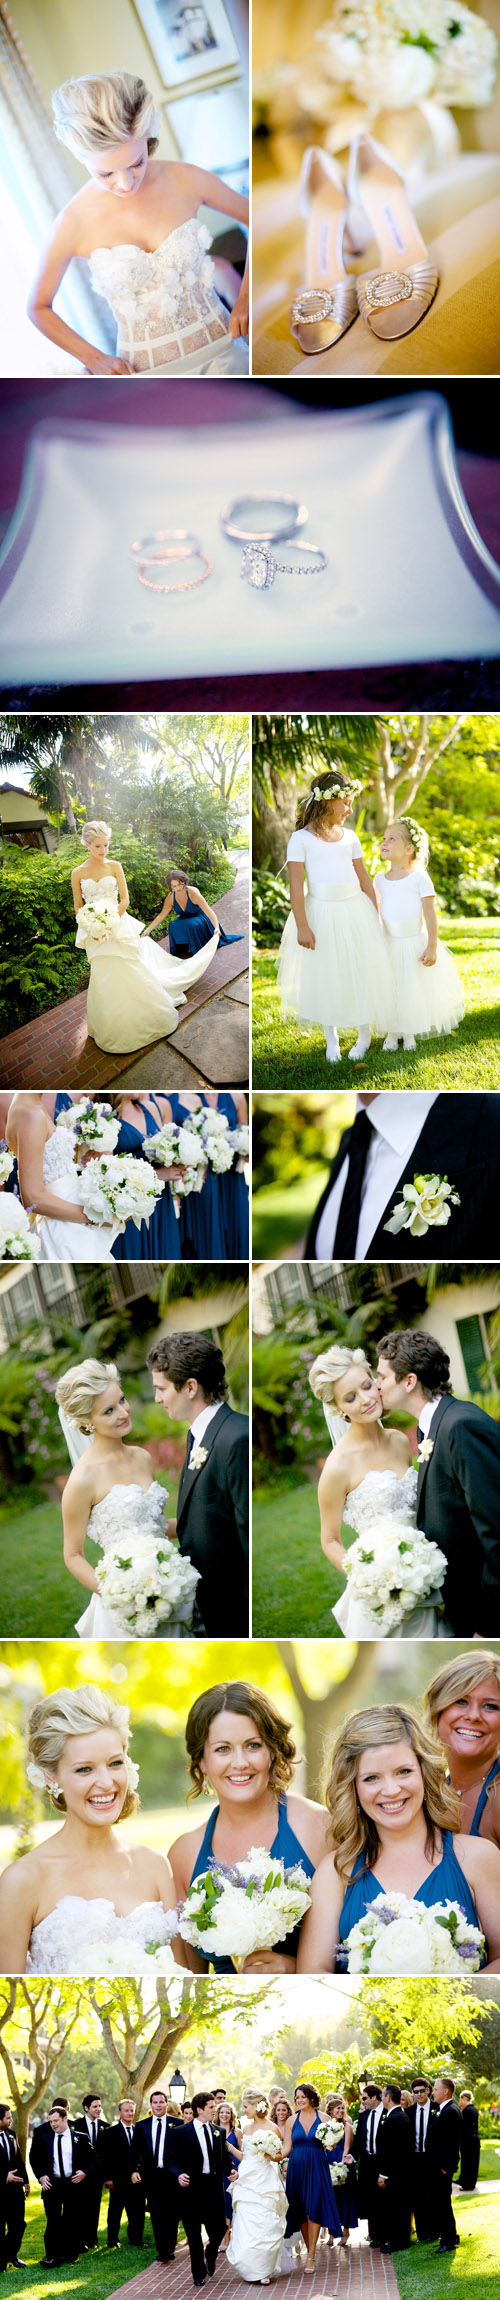 destination wedding at the Four Seasons Hotel in Santa Barbara, California, photos by BB Photography